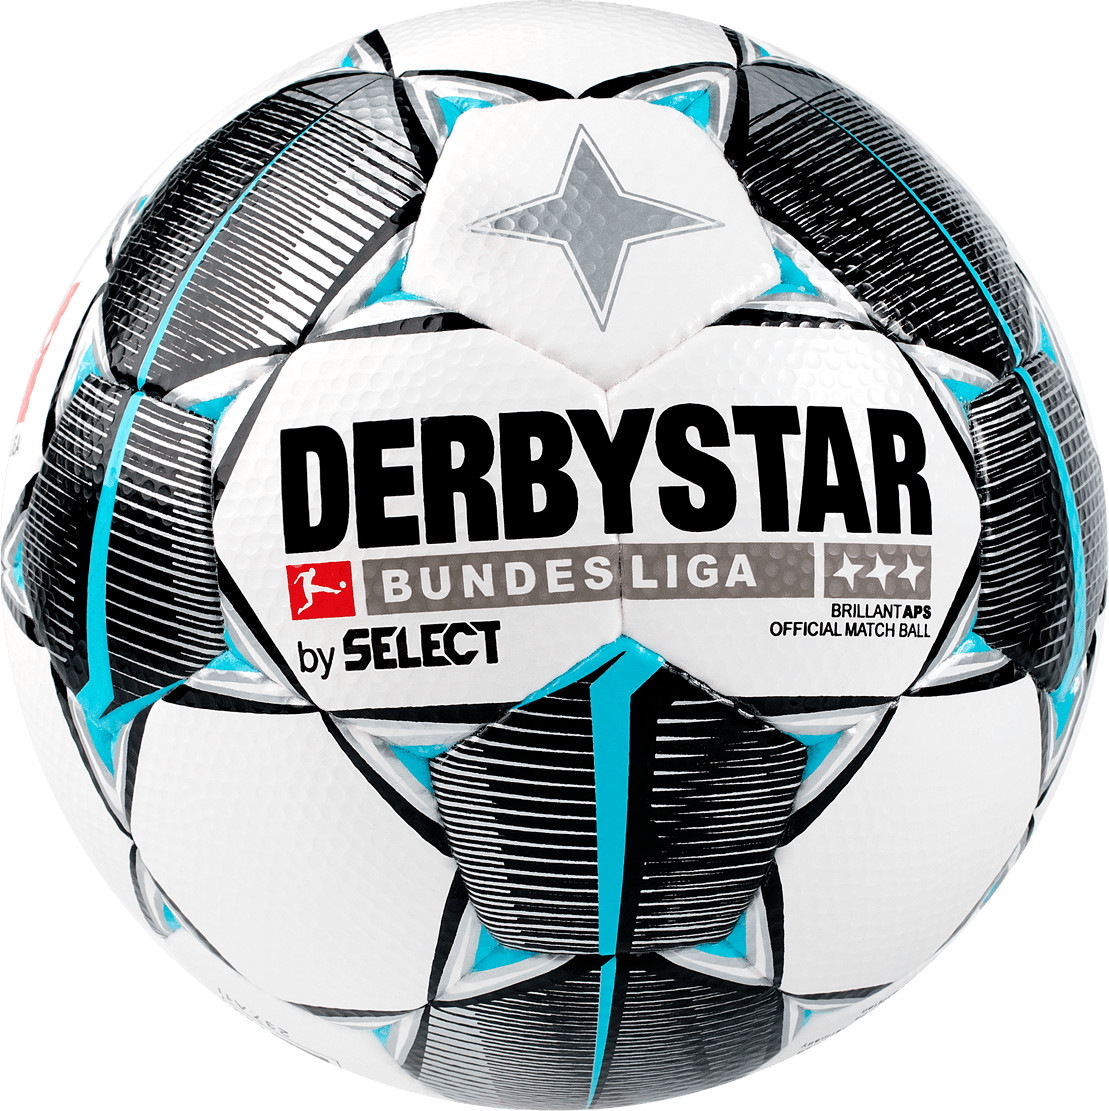 Derbystar | Preisvergleich ab Brillant APS 139,95 bei 2019/20 (1802500019) OMB €